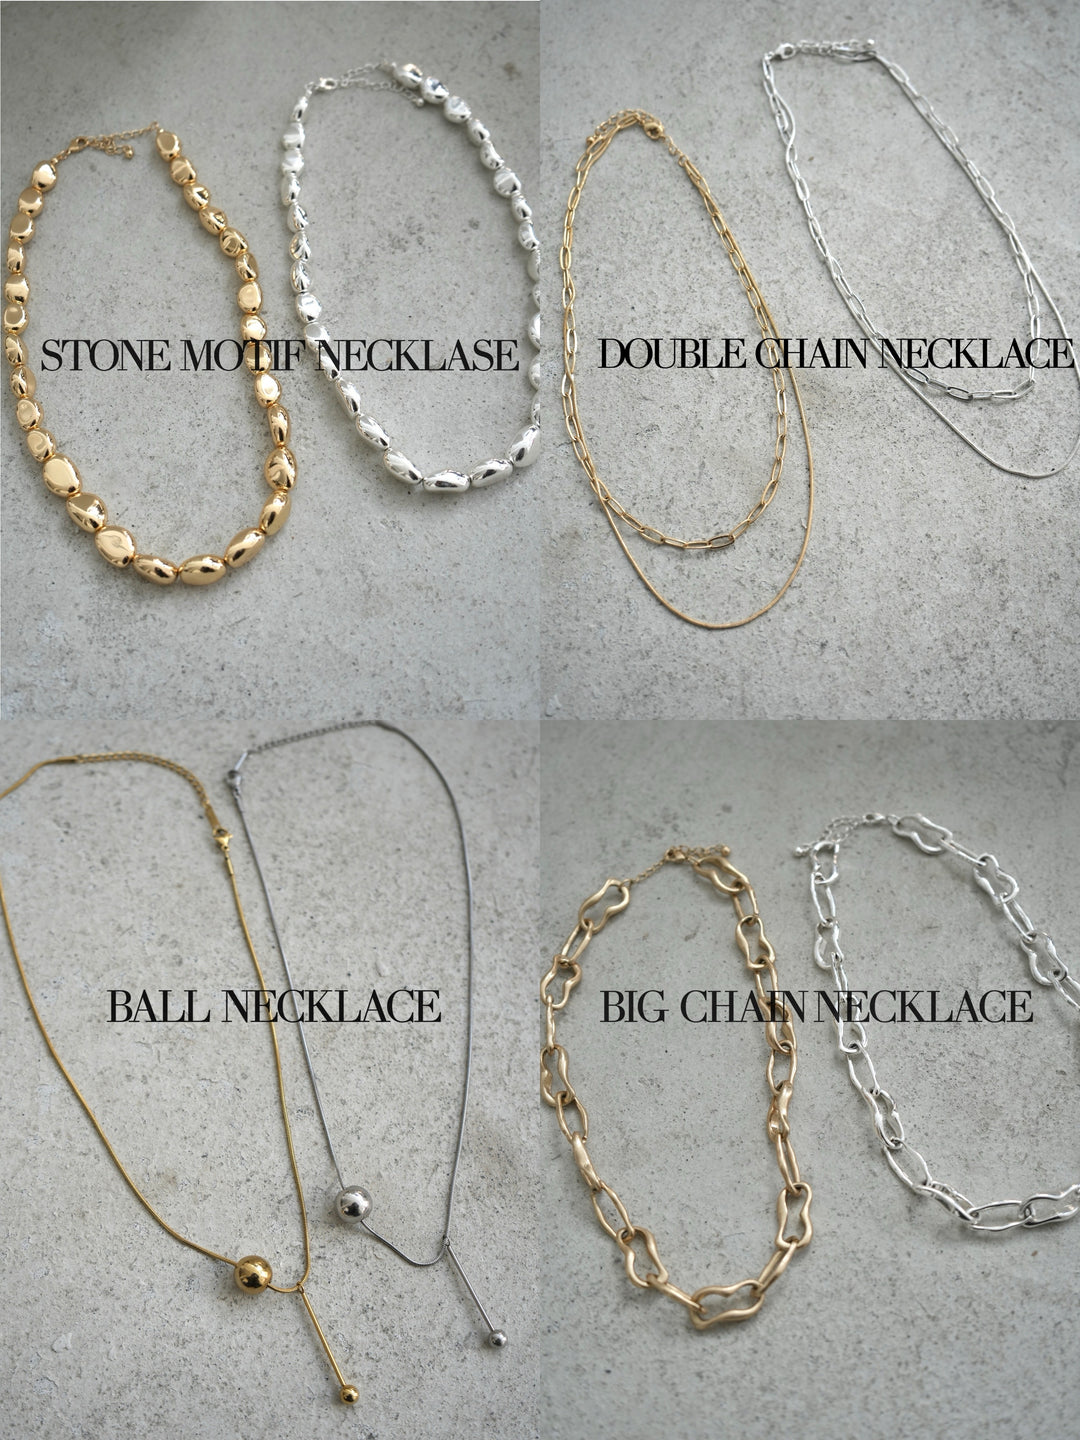 [SET] Mellow design sheer top + choice of necklace set (2 sets)